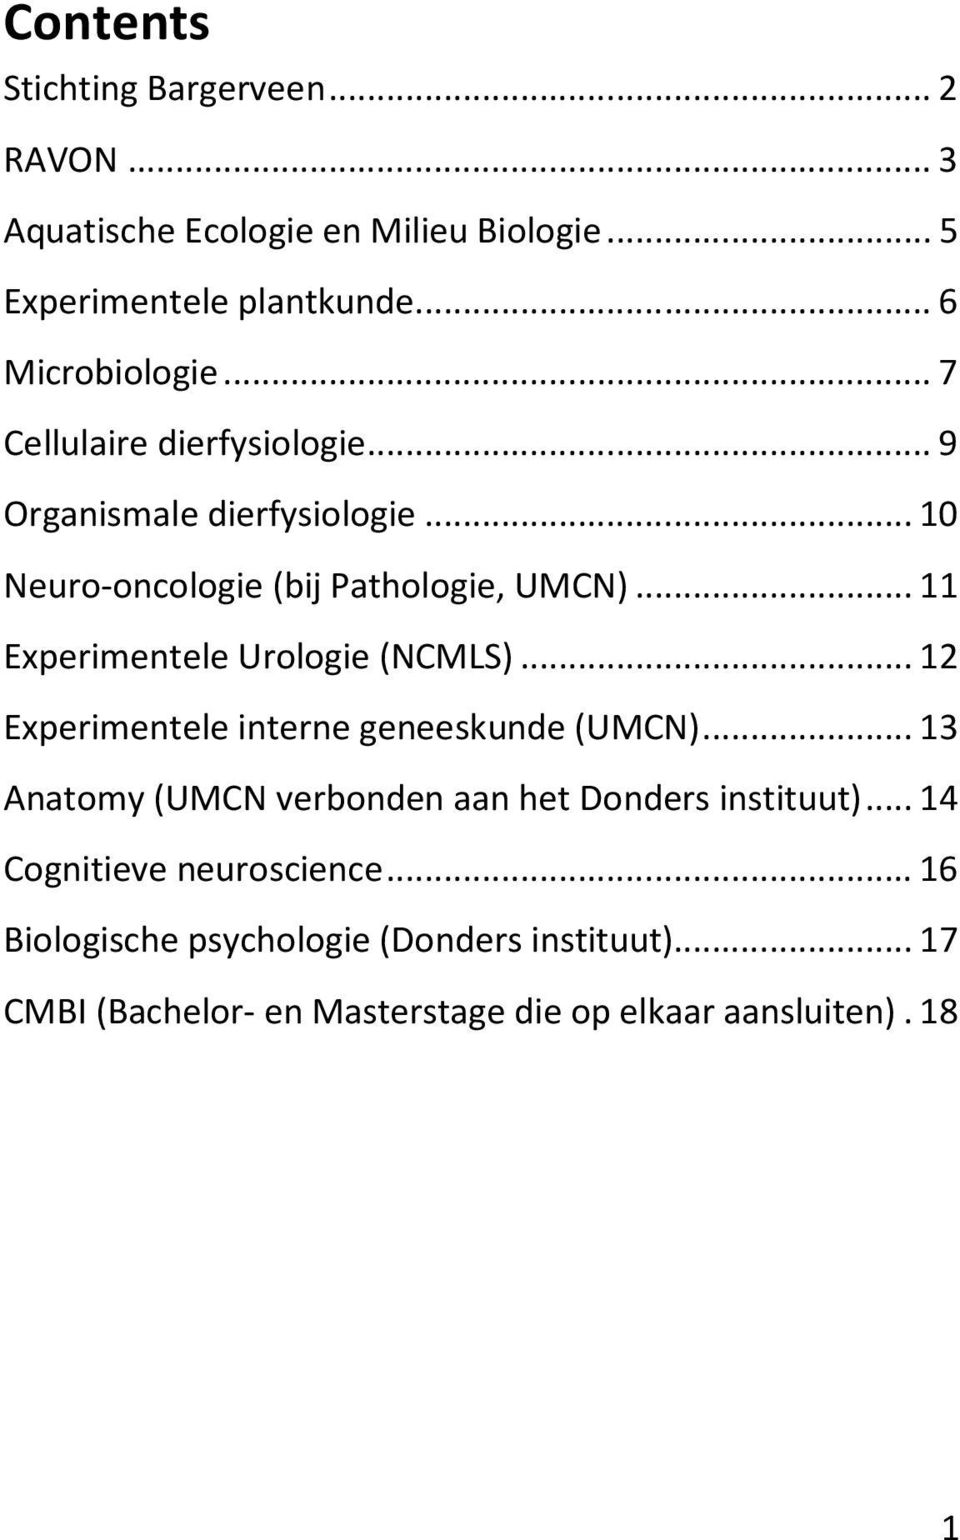 .. 11 Experimentele Urologie (NCMLS)... 12 Experimentele interne geneeskunde (UMCN).